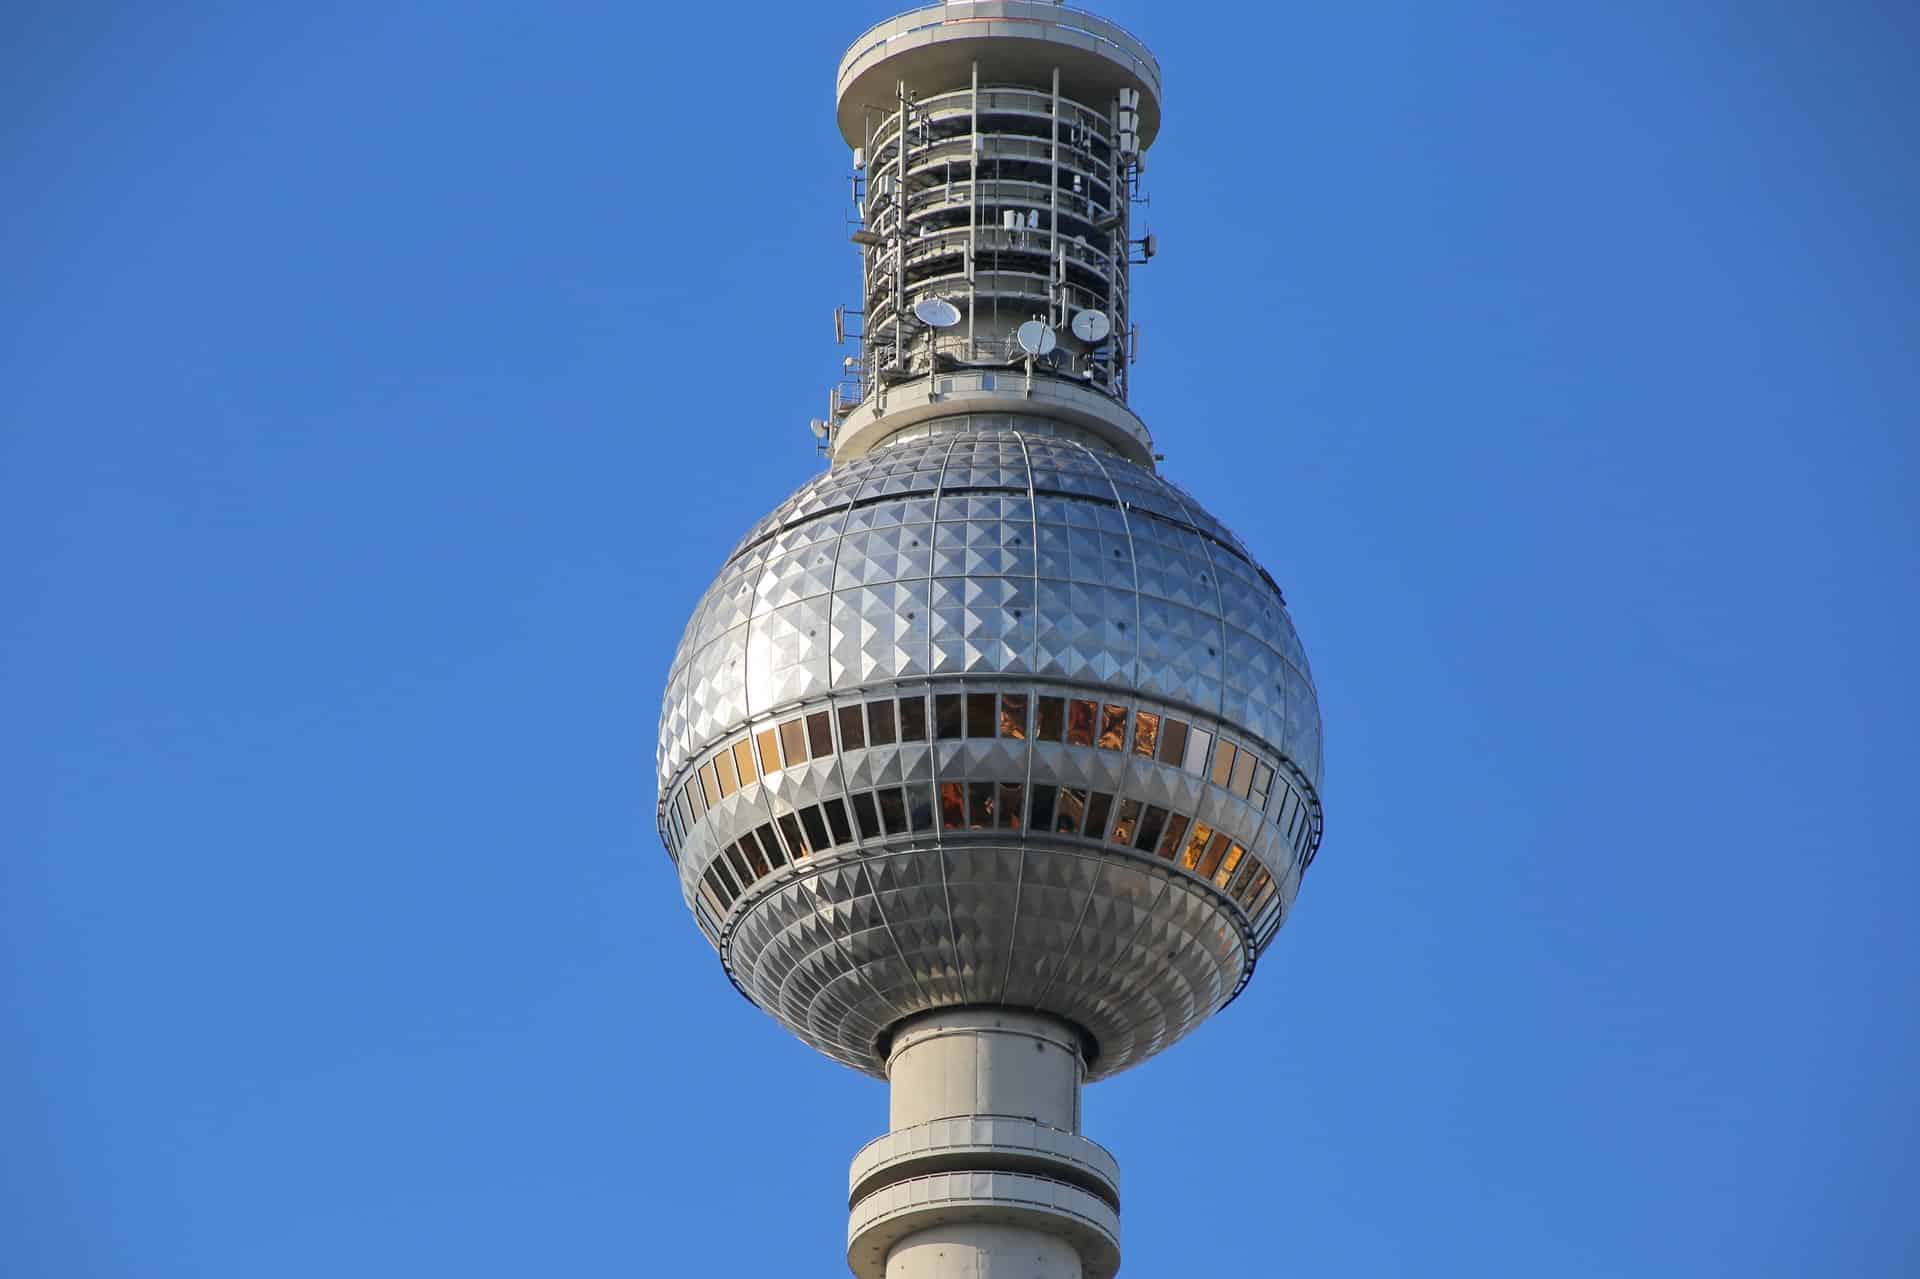 The Berlin Quiz - TV Tower